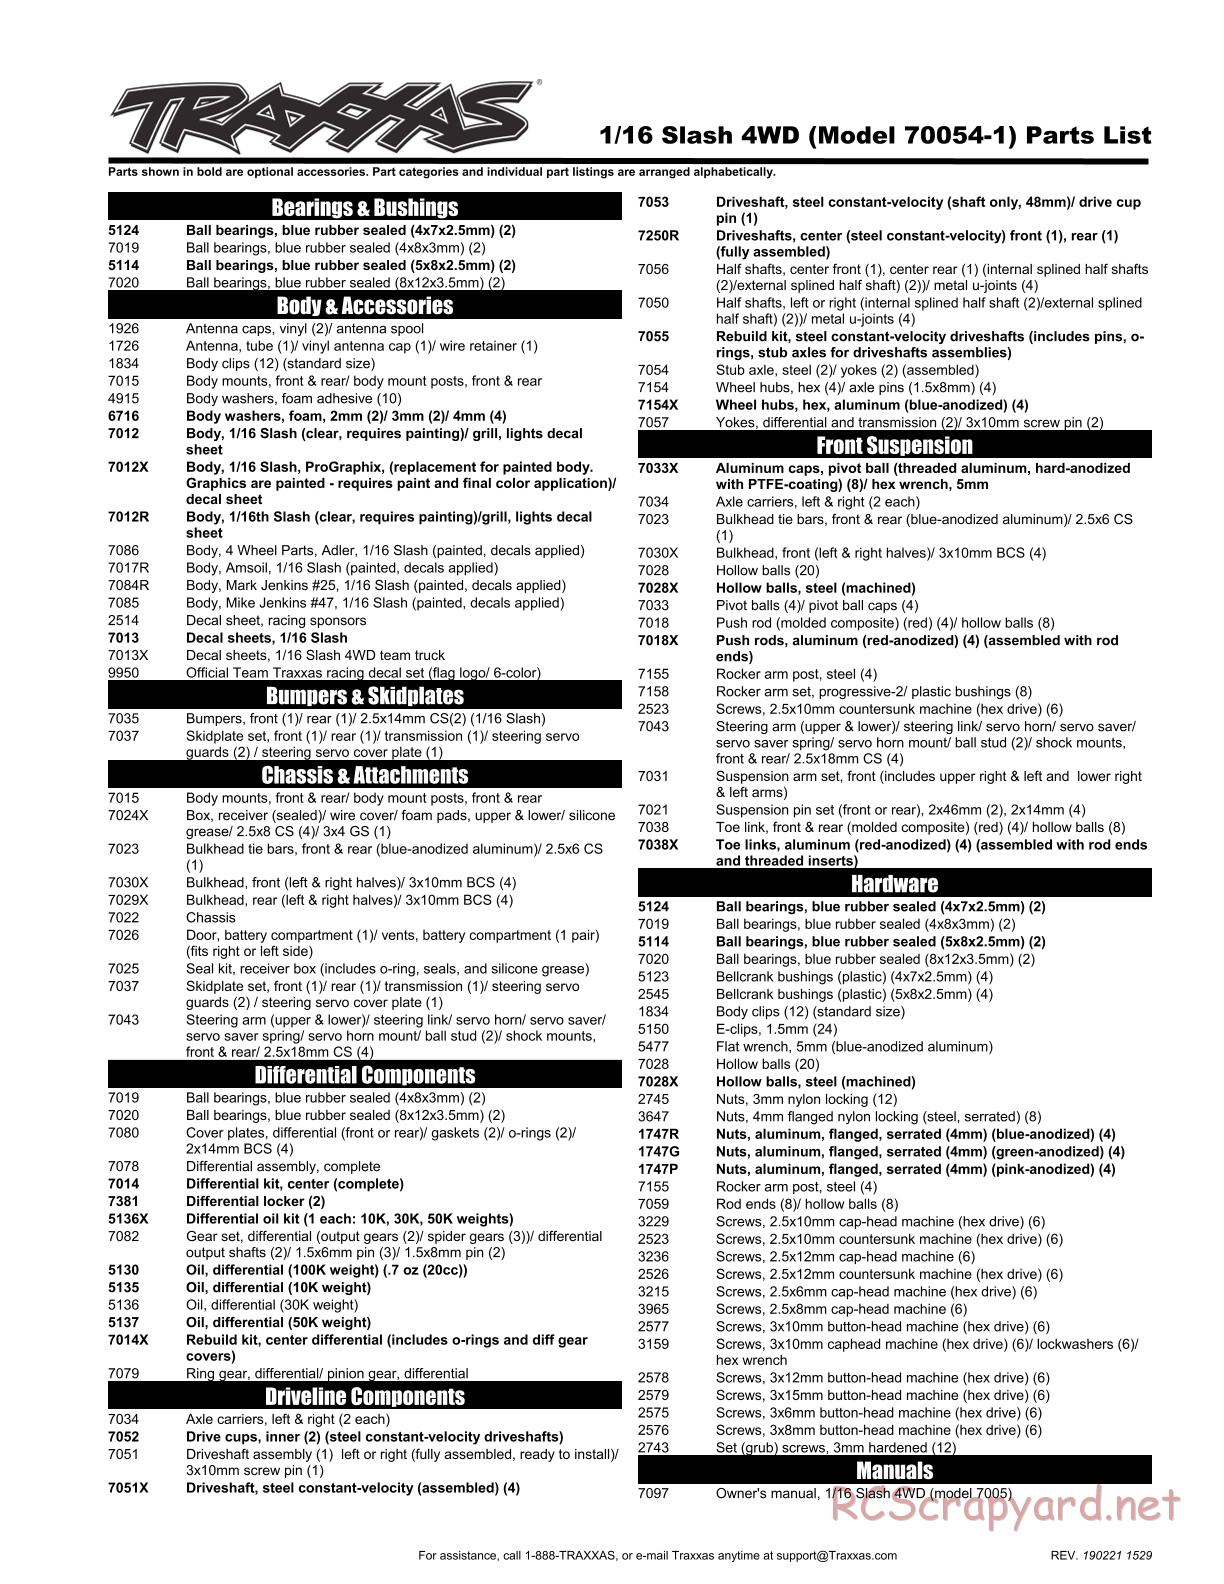 Traxxas - 1/16 Slash 4x4 Brushed - Parts List - Page 1